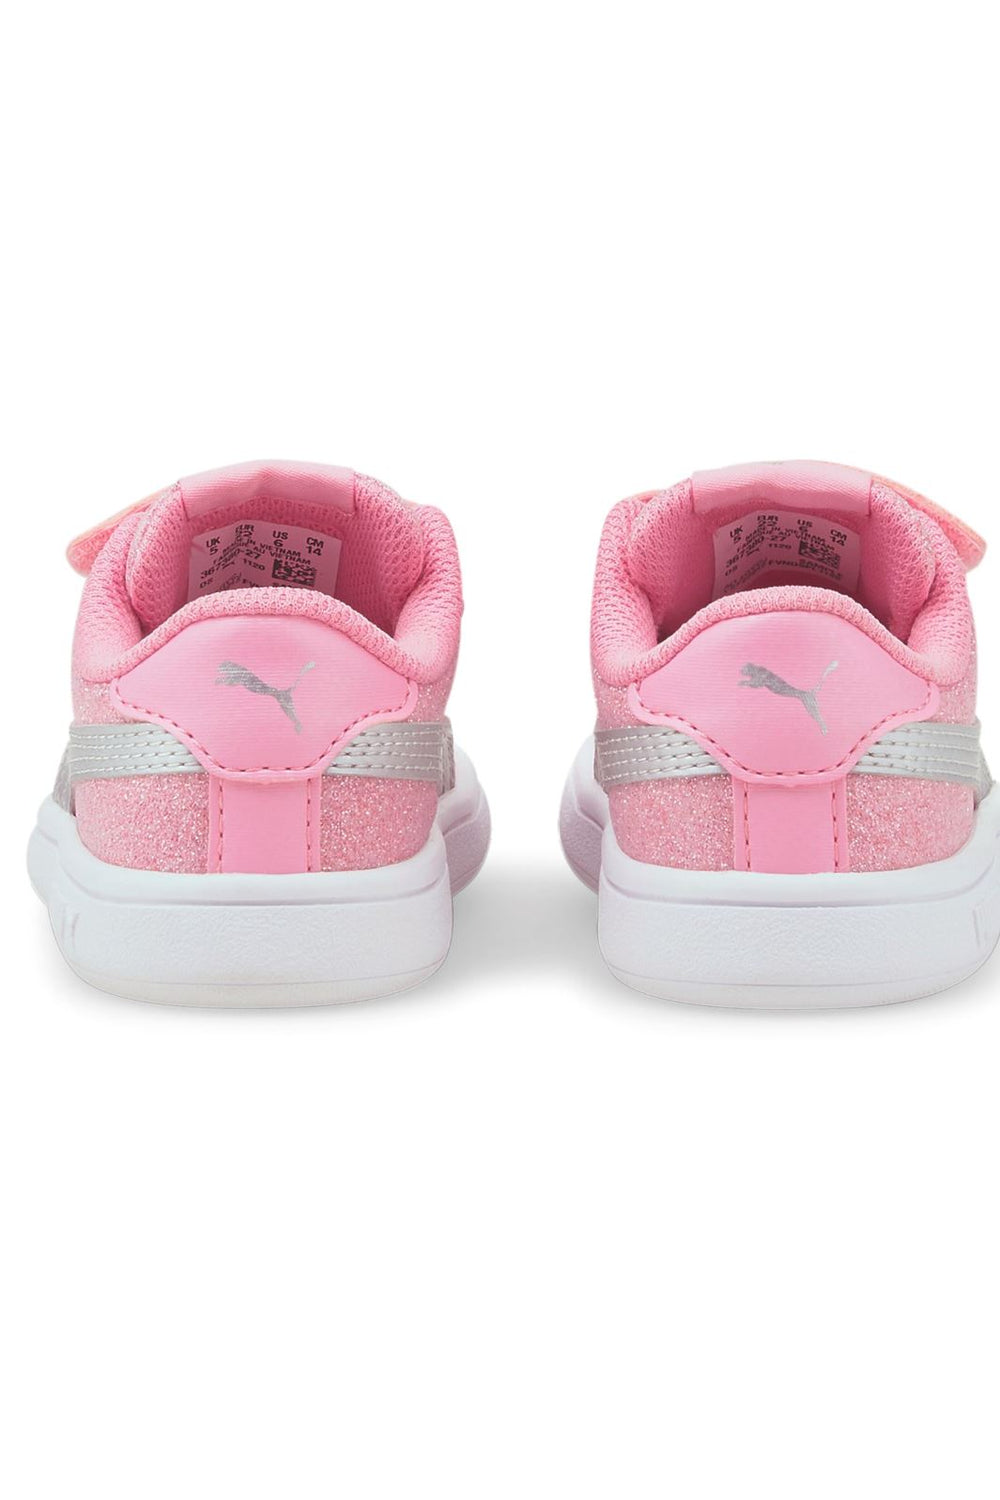 Puma - Puma Smash v2 Glitz Glam V PS - Pink 27 Sneakers 